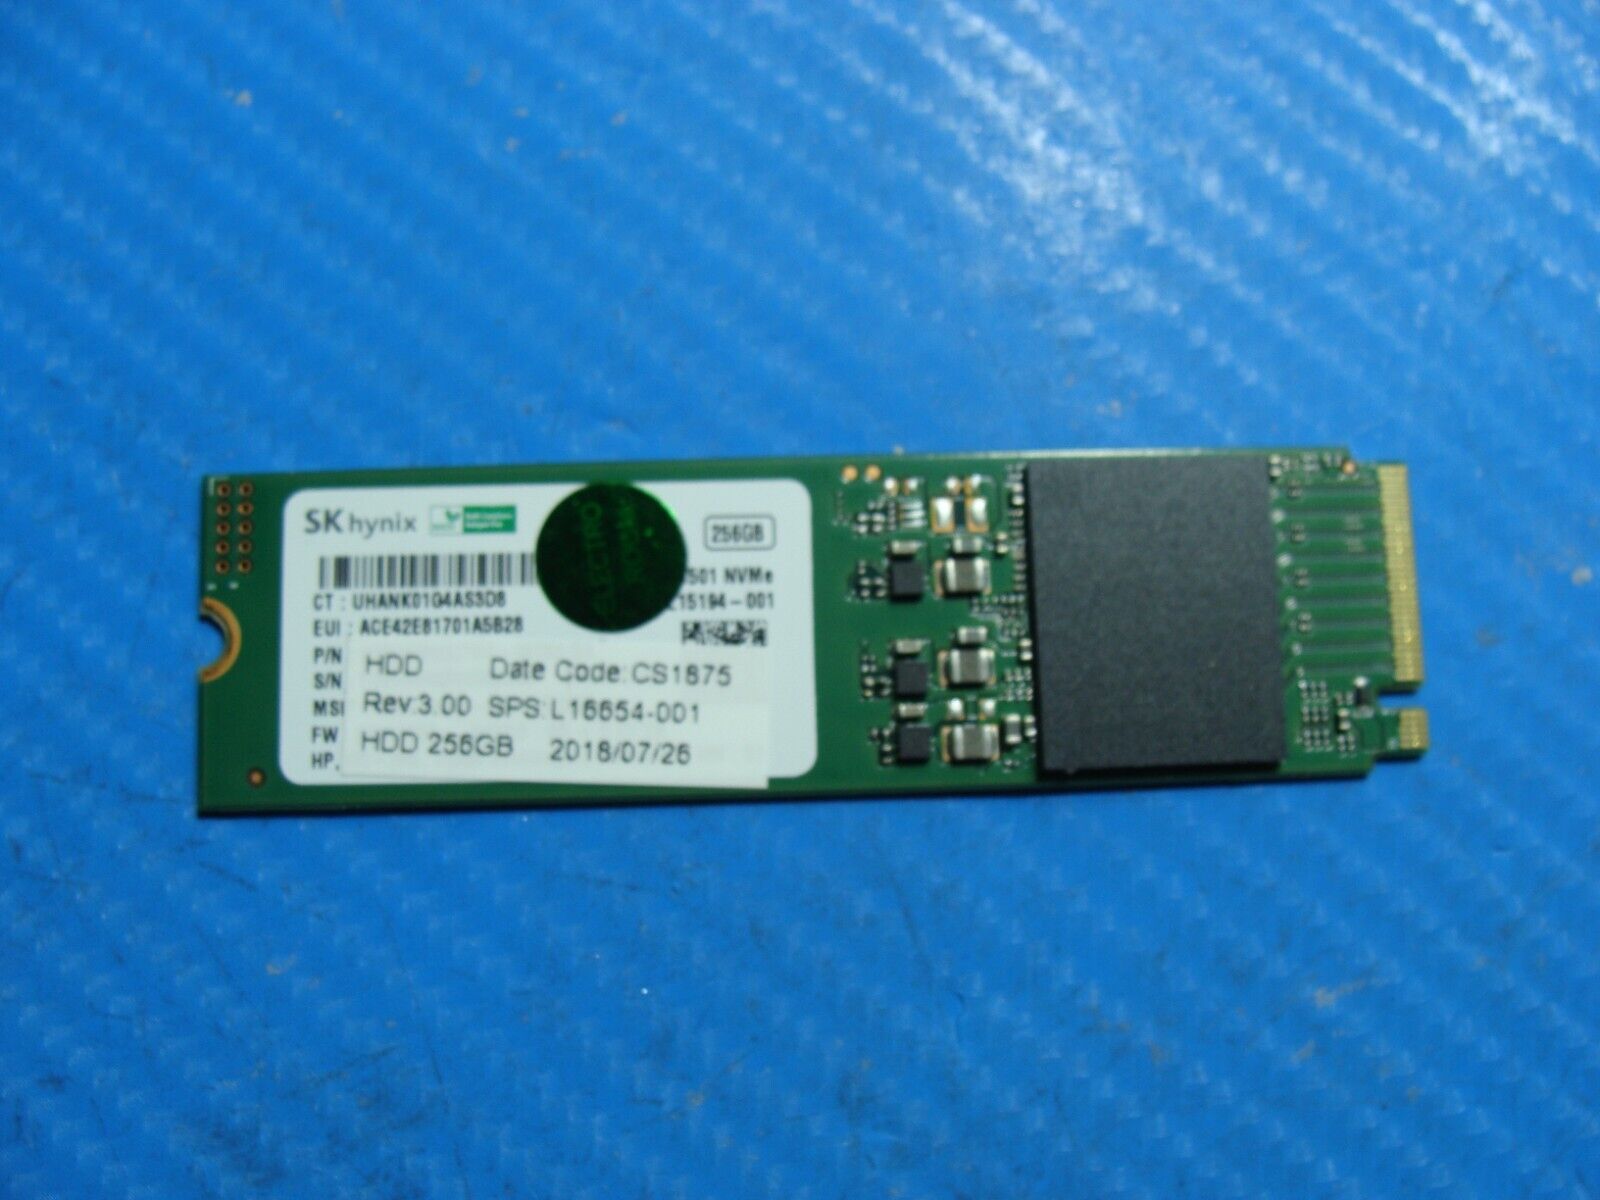 HP 650 G2 SK Hynix M.2 NVMe 256GB SSD Solid State Drive L16654-001